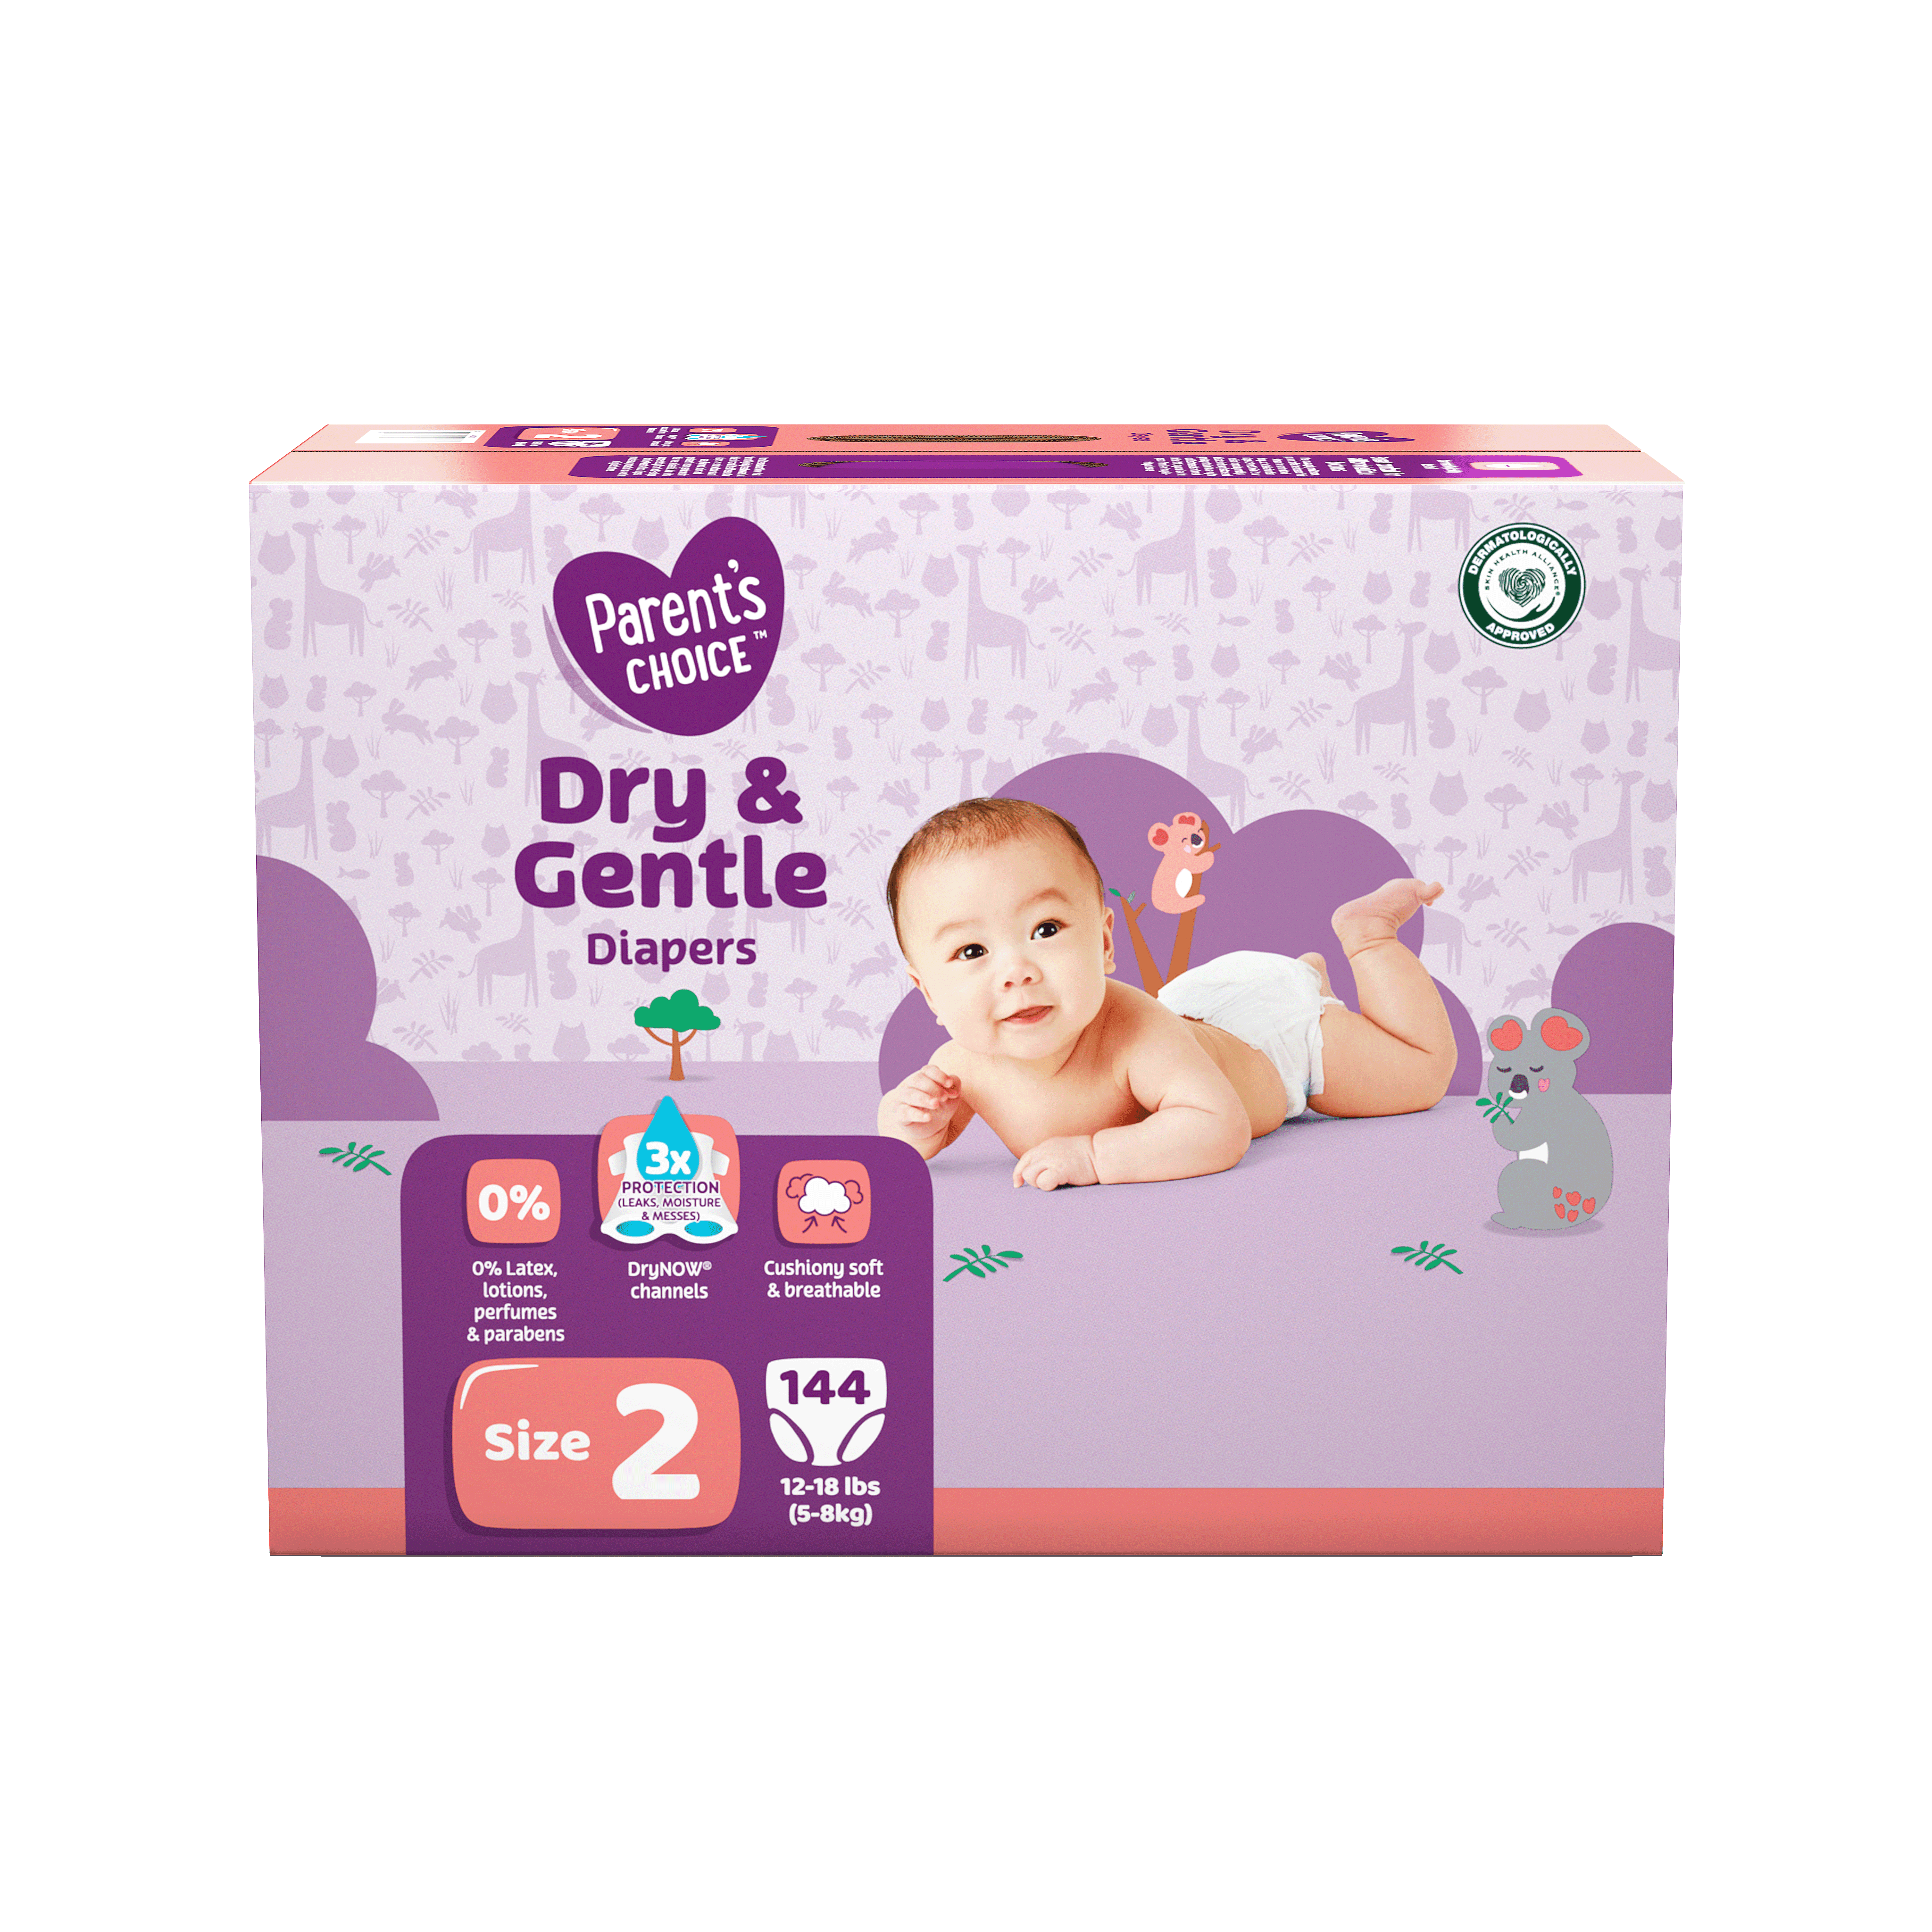 Chupete NUK Sensitive 0-6 meses Set x 2 (100% Silicona ) – b&m diapers